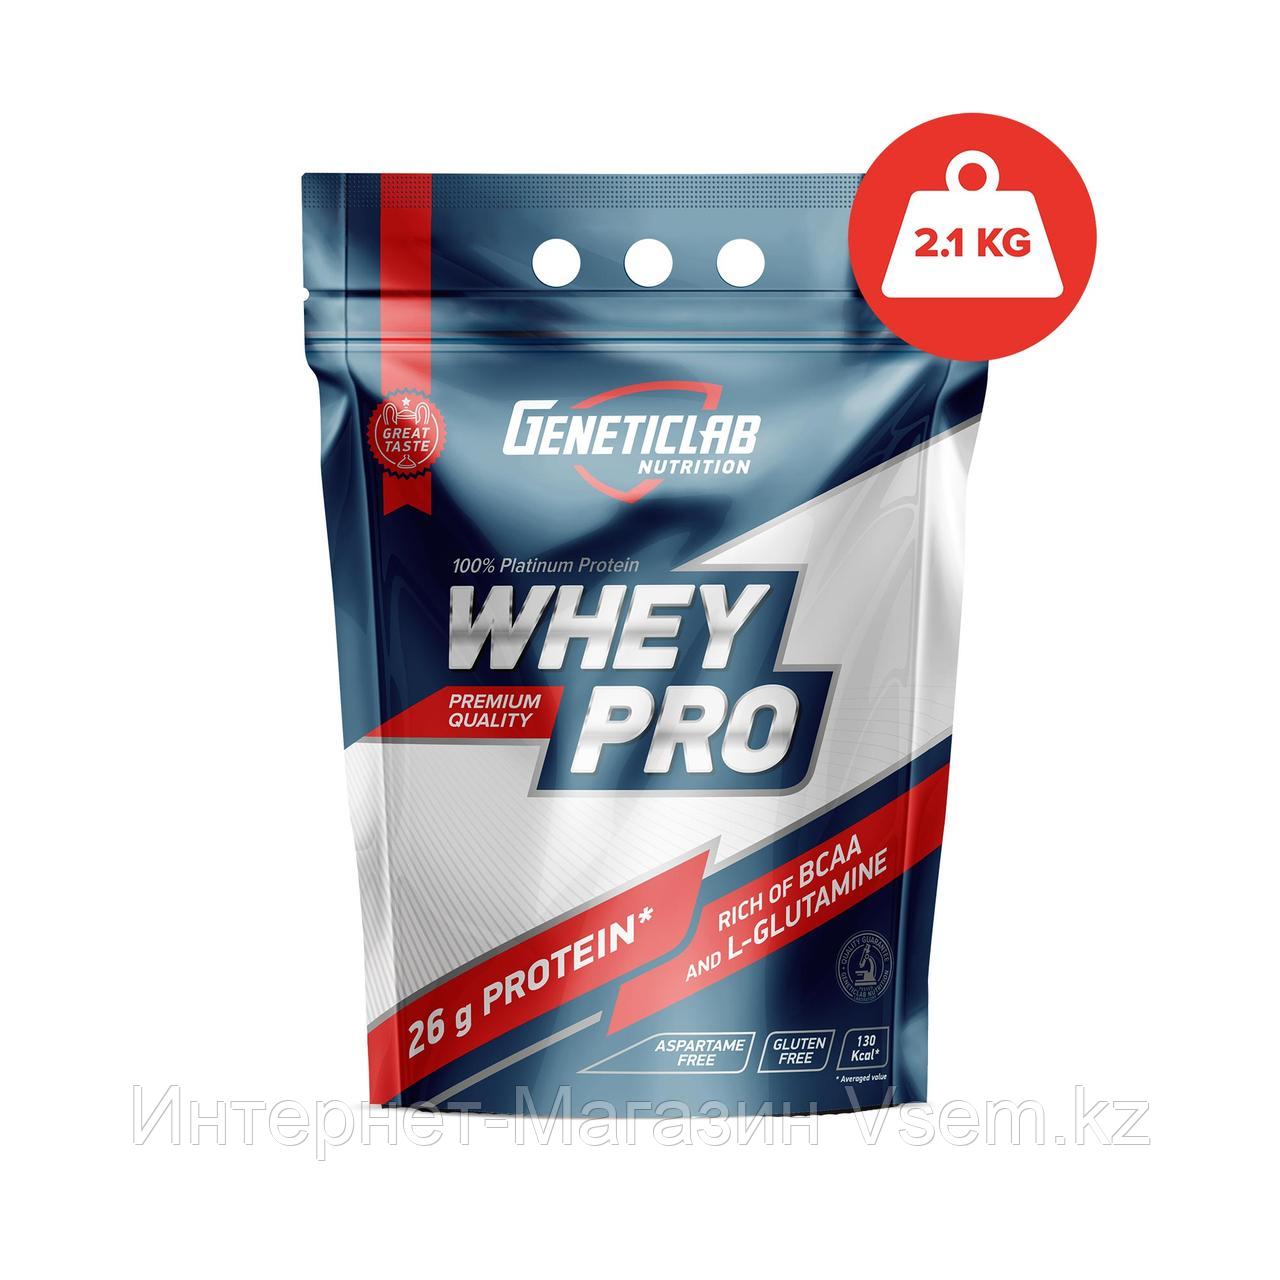 Geneticlab Whey Pro, 2.1 кг (вкус на выбор)